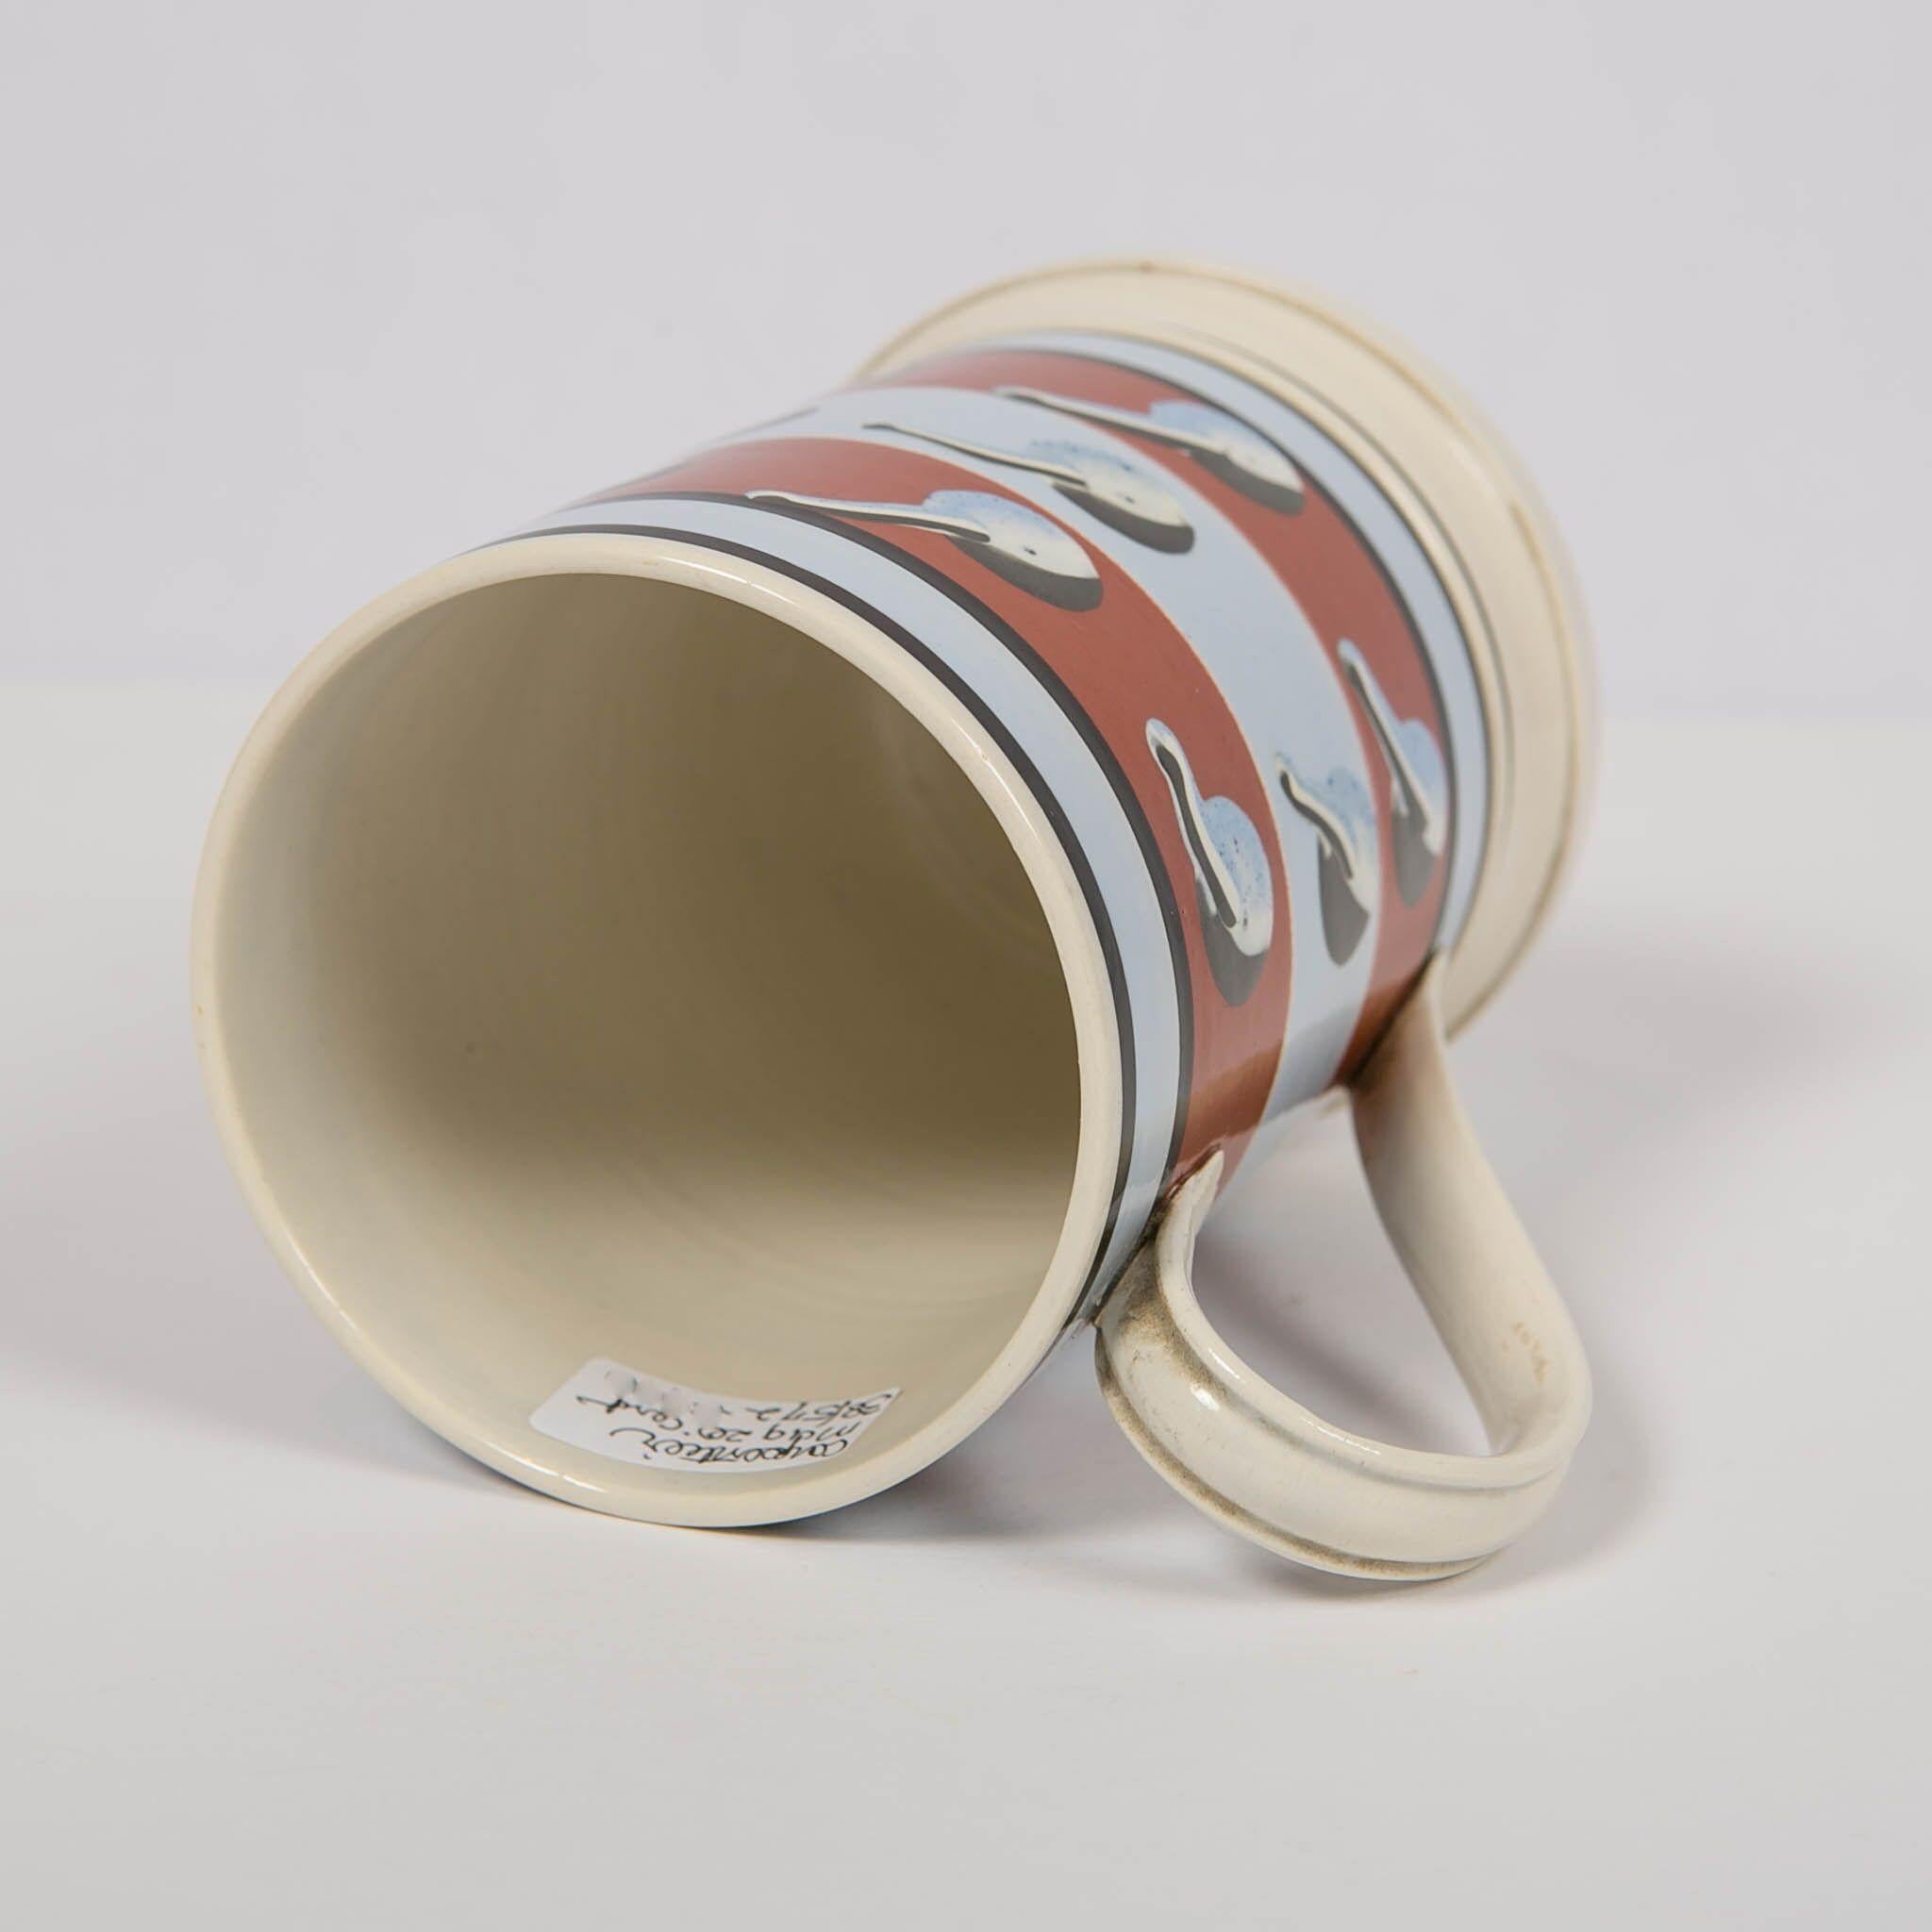 American Modern Mochaware Mug Made by Don Carpentier in 1993